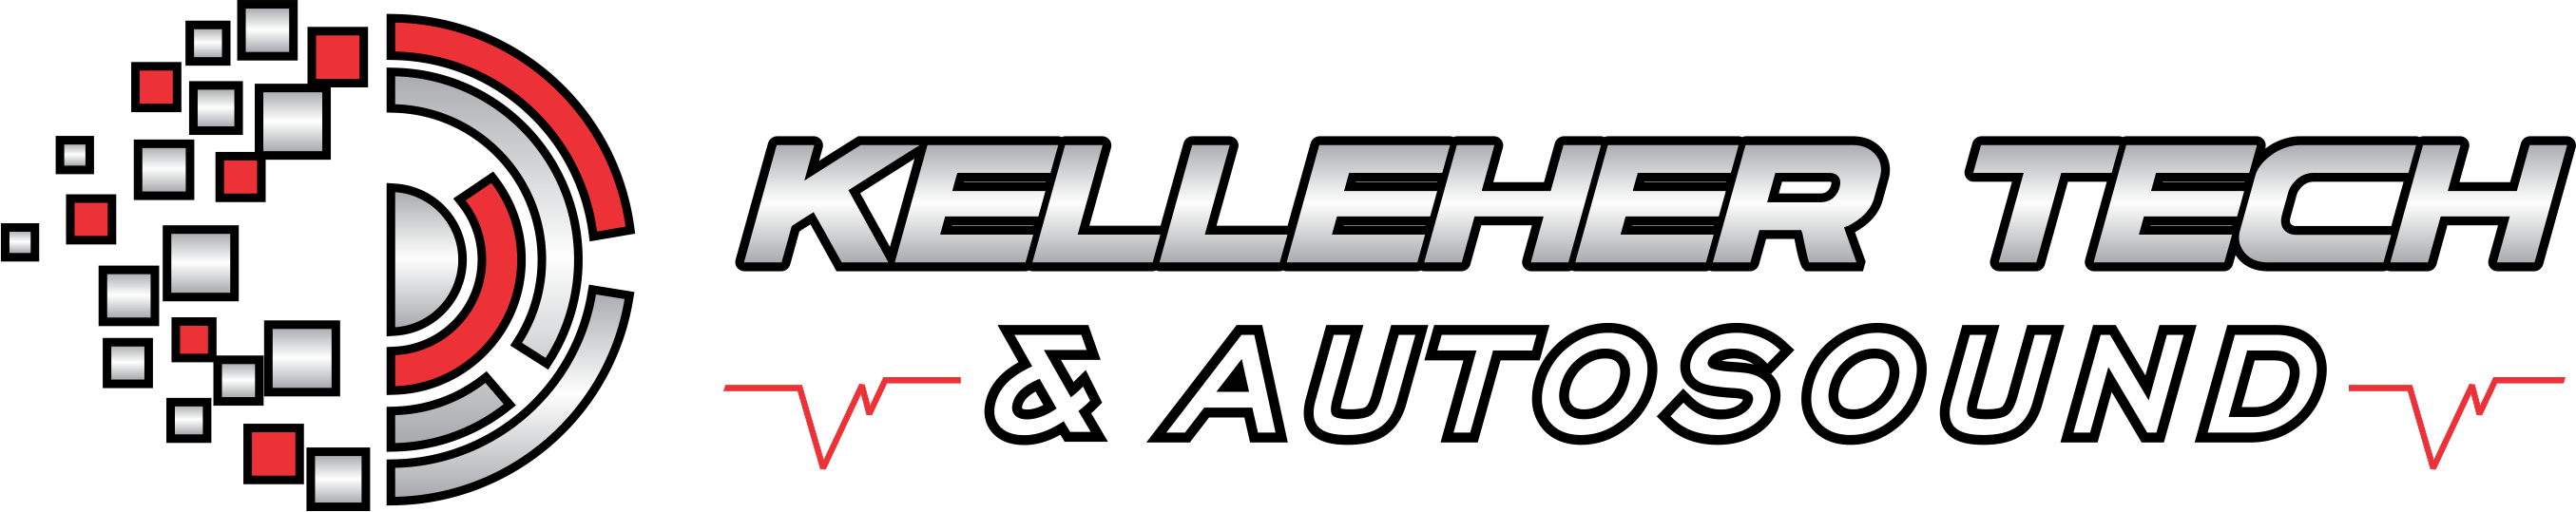 Kelleher Tech & Autosound